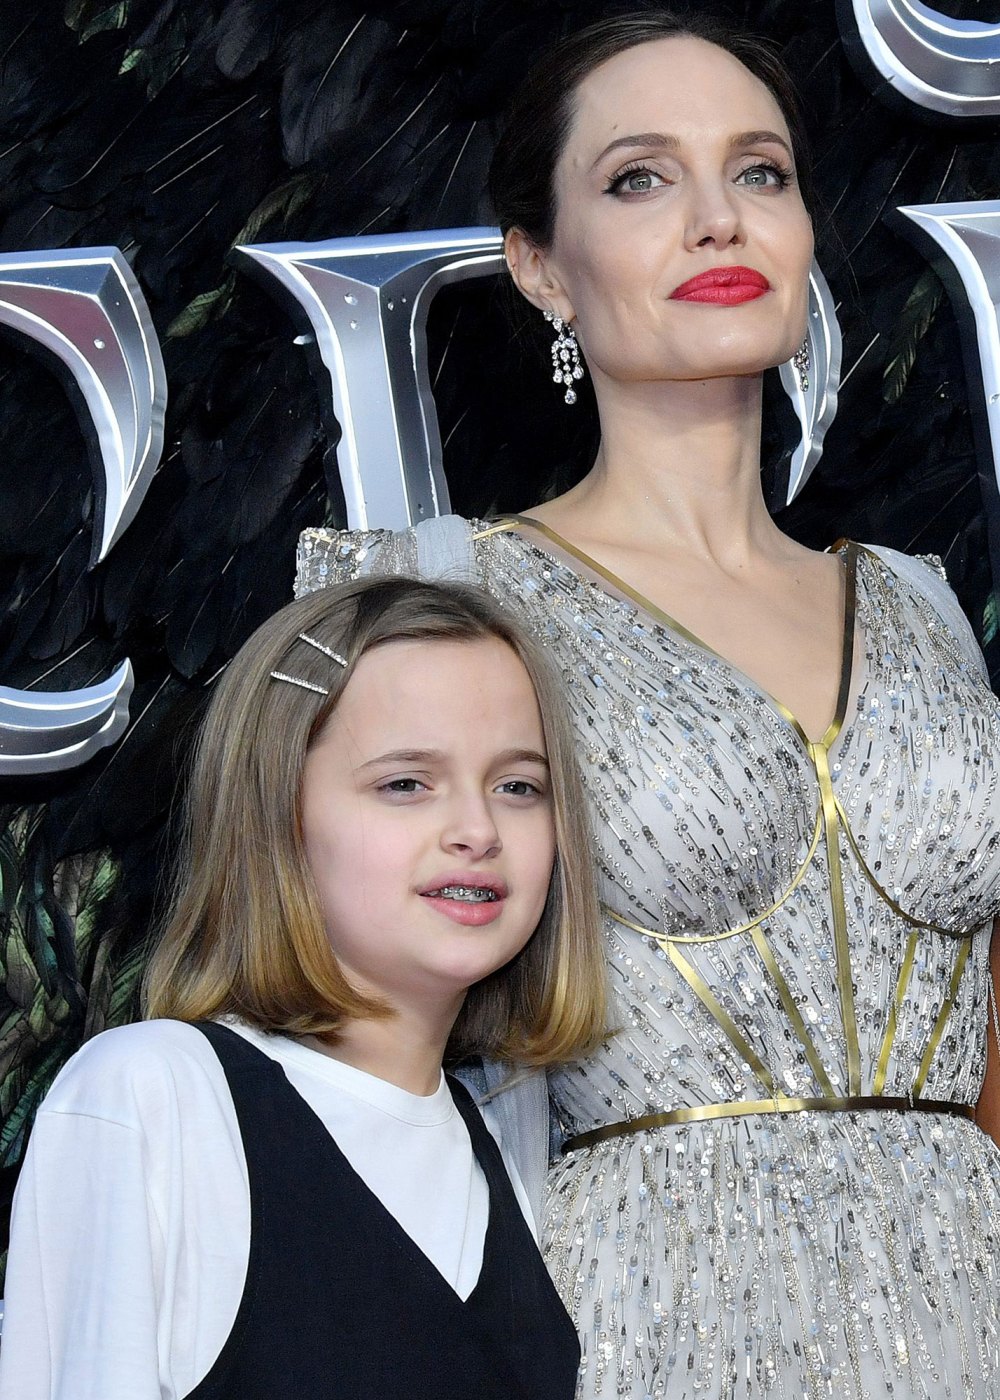 Angelina Jolie’s Daughter Vivienne Jolie-Pitt Joins Mom in Maleficent as Princess Aurora